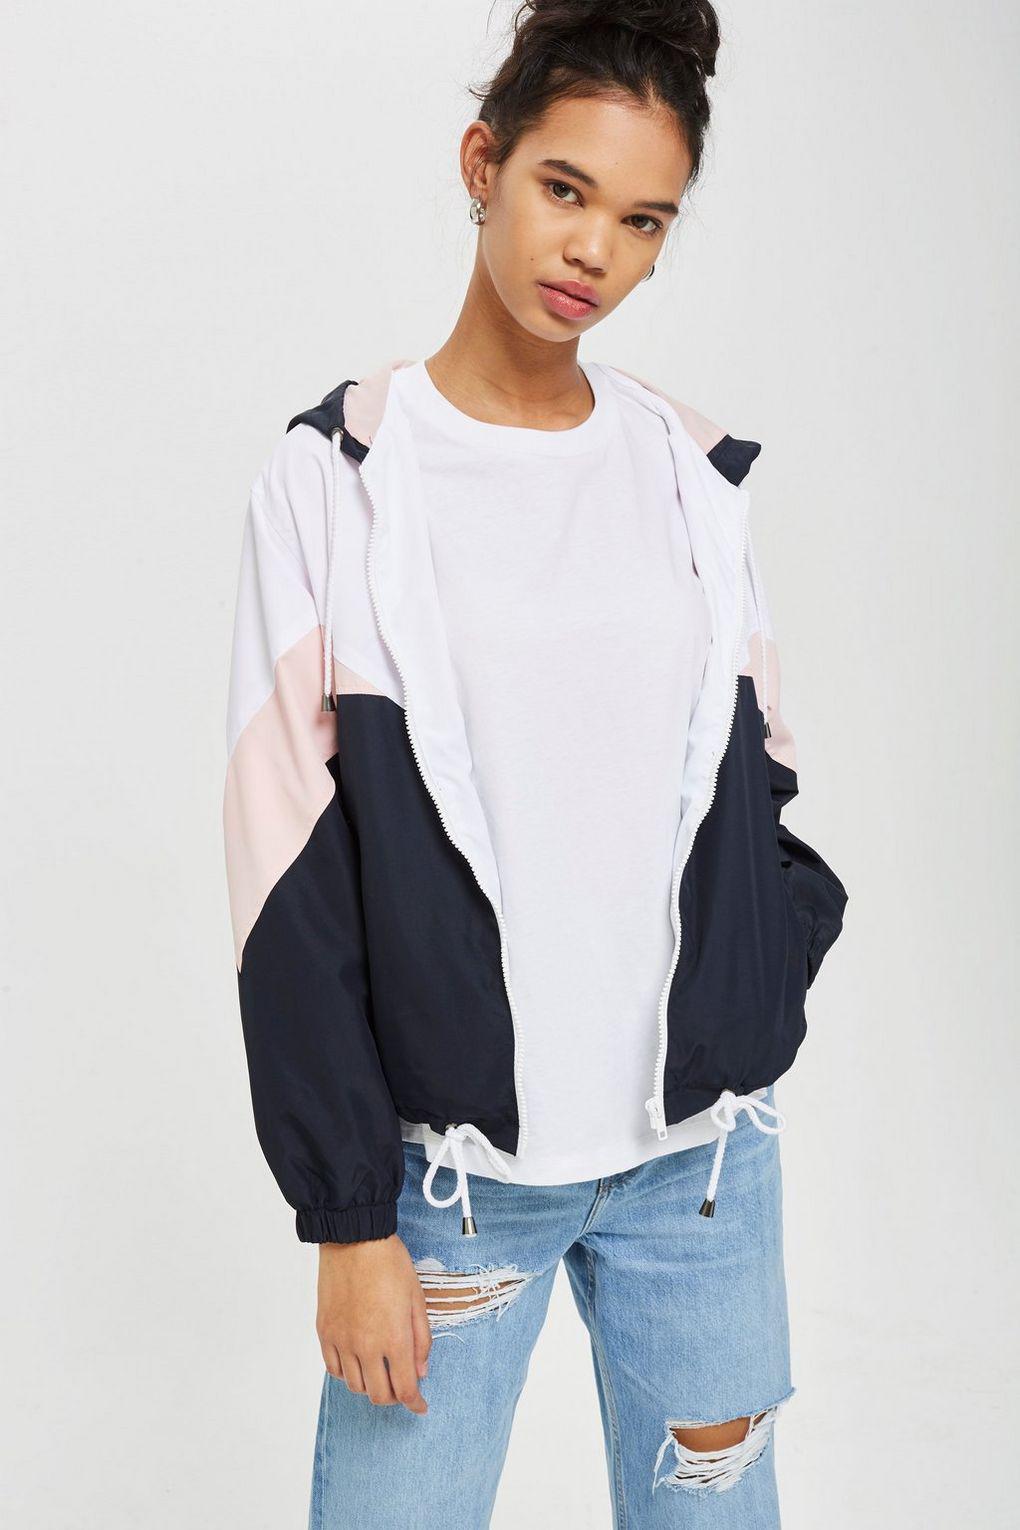 TOPSHOP Denim Colour Block Windbreaker Jacket in Pink - Lyst